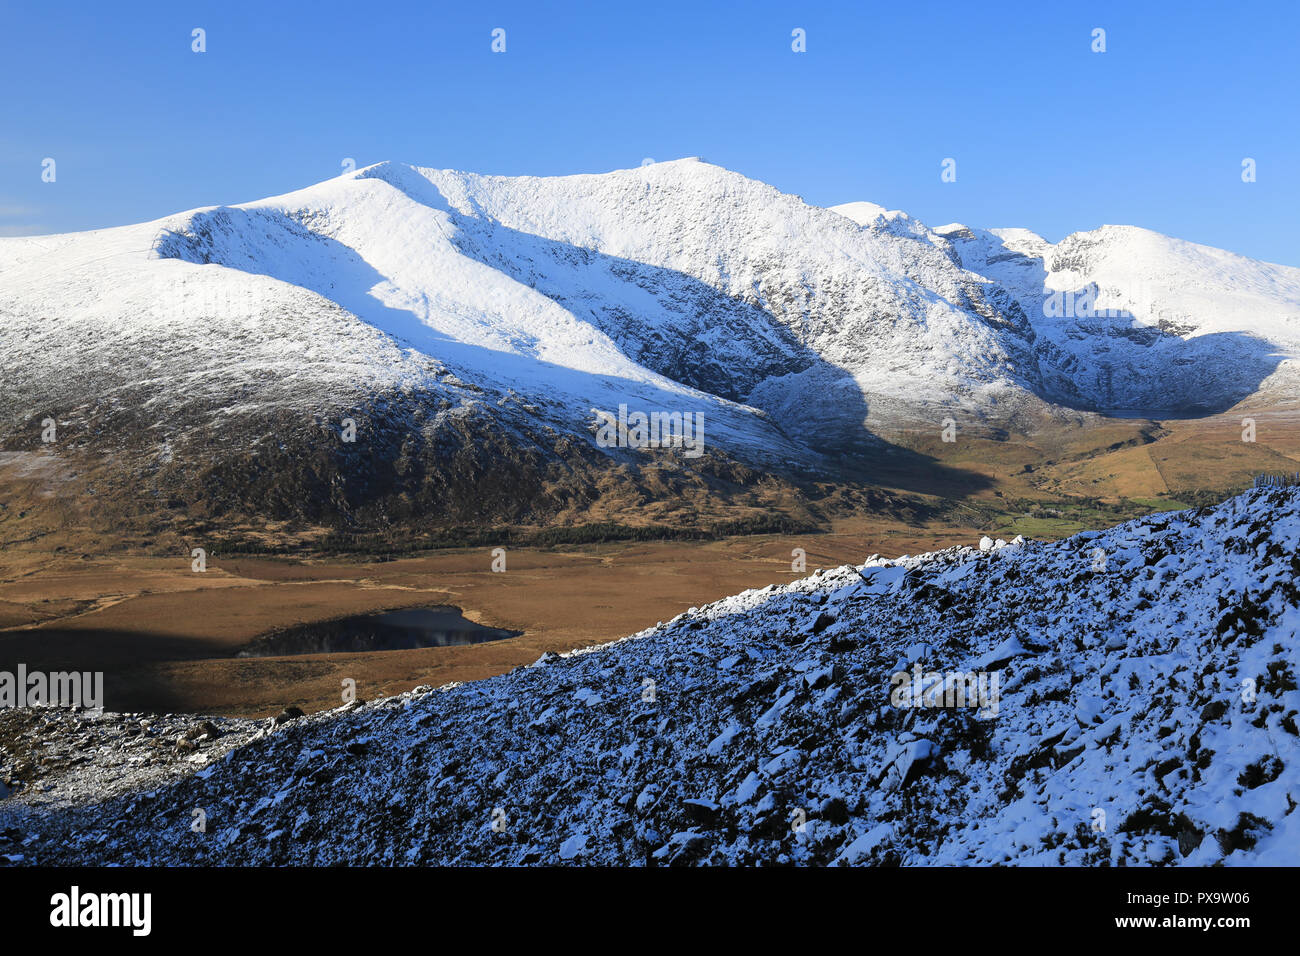 irelands second highest mountain covered in winter snow, wild atlantic way, county kerry, ireland Stock Photo